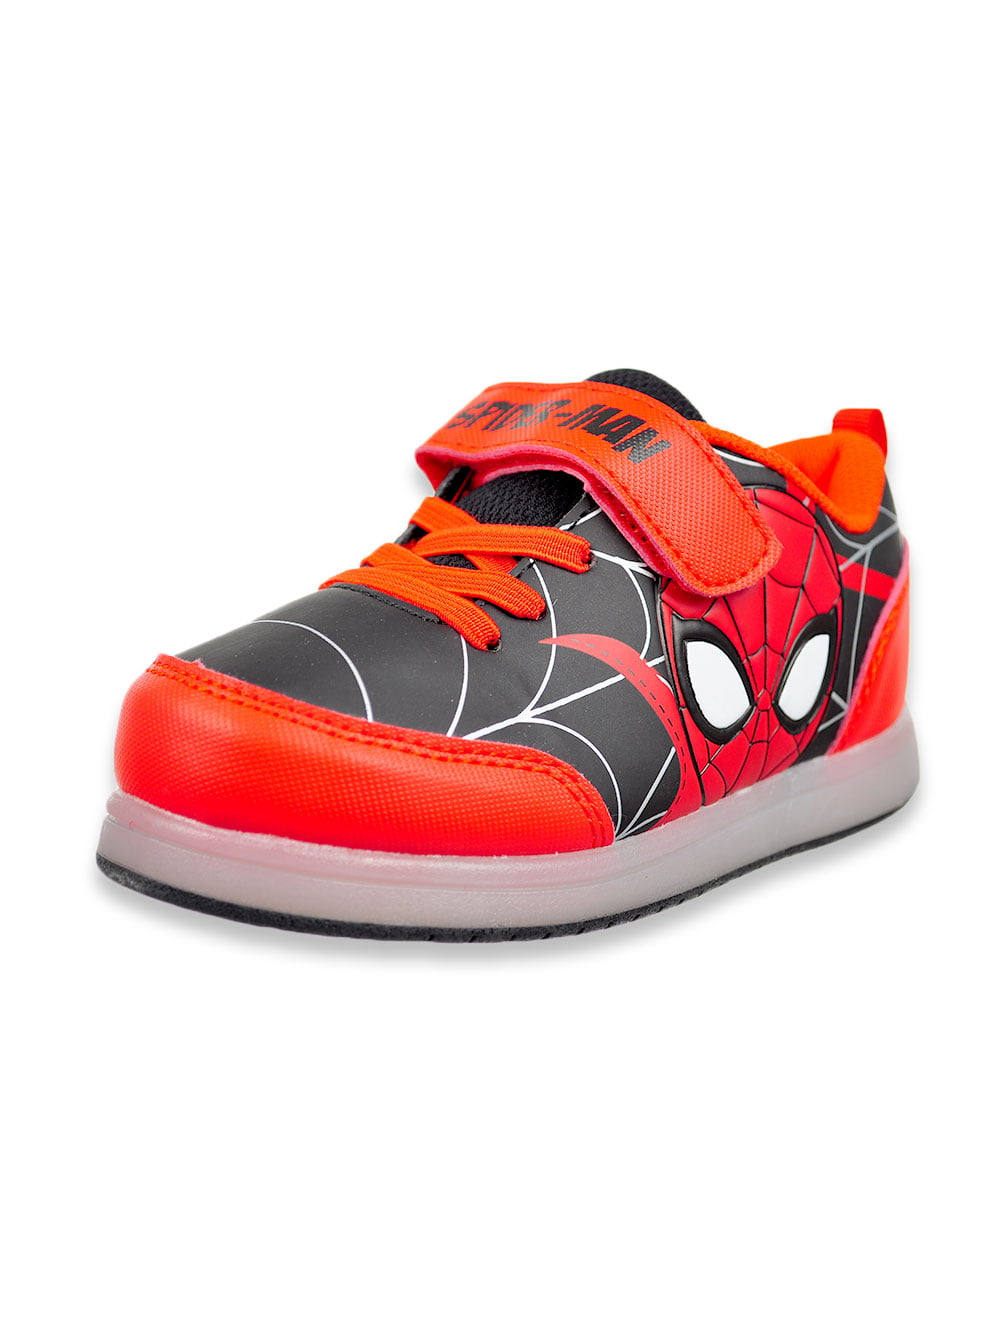 spiderman light up shoes walmart